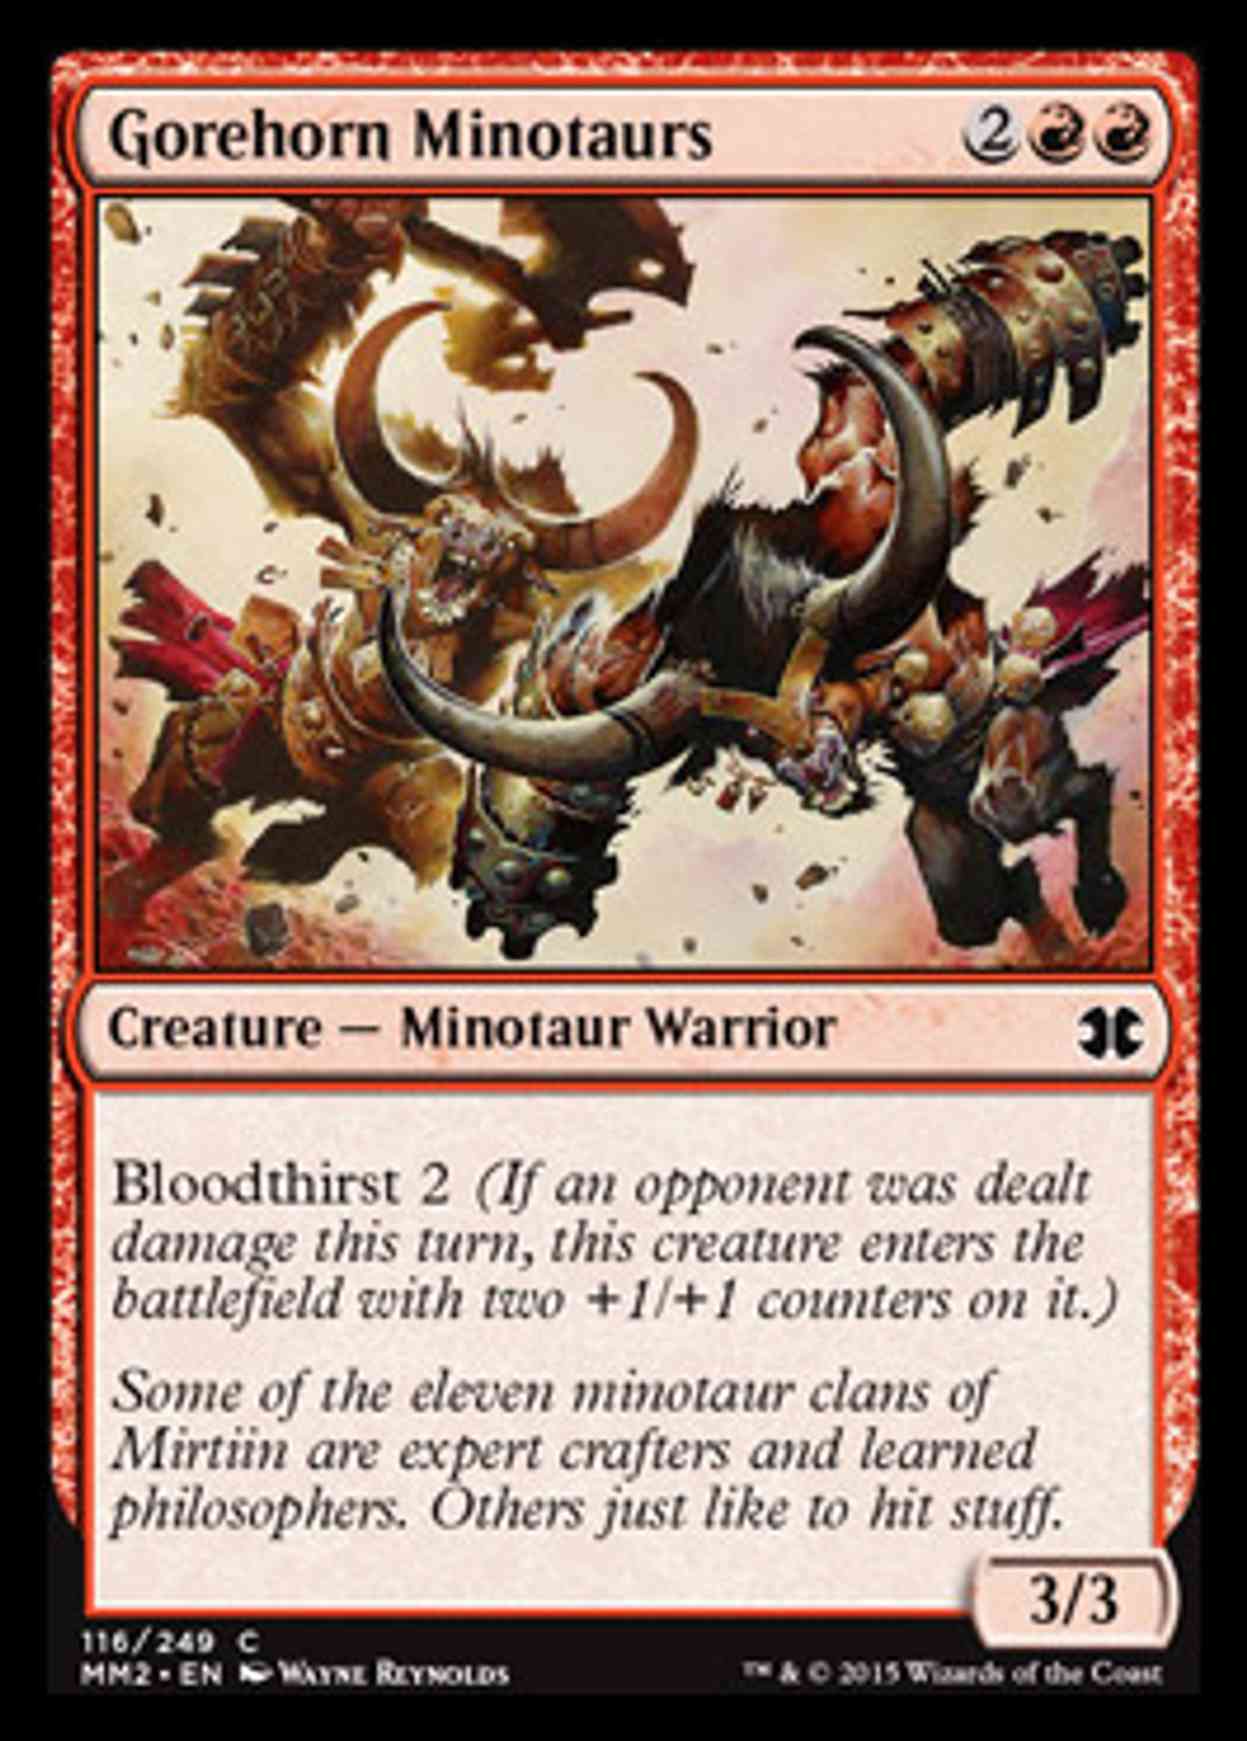 Gorehorn Minotaurs magic card front